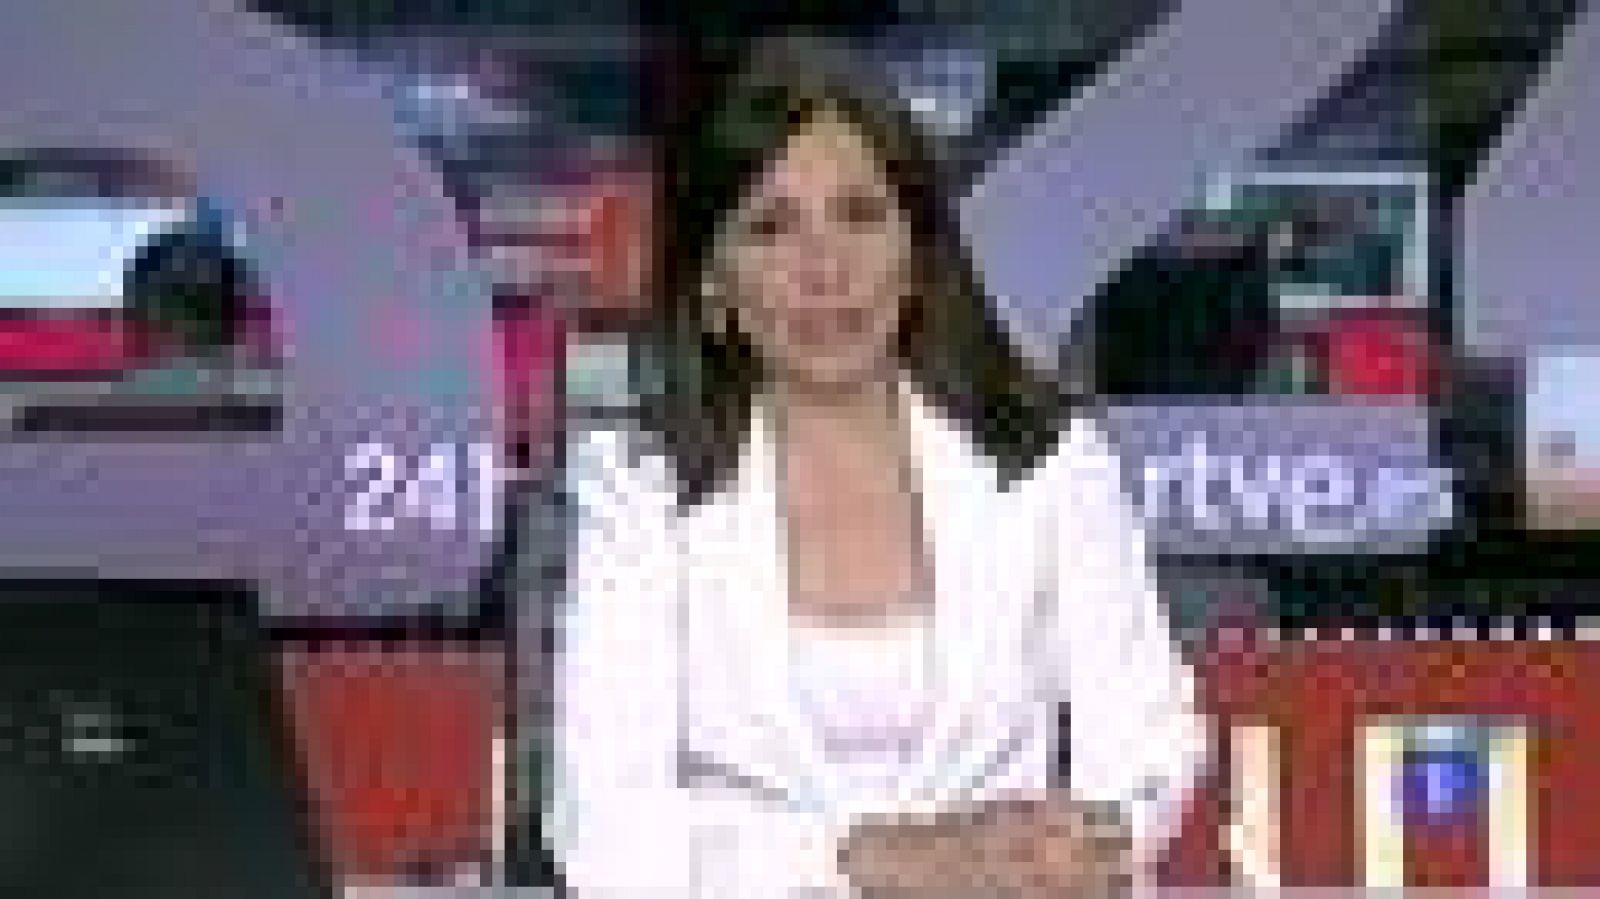 Telediario 1: Telediario Matinal en 4' - 31/07/12 | RTVE Play